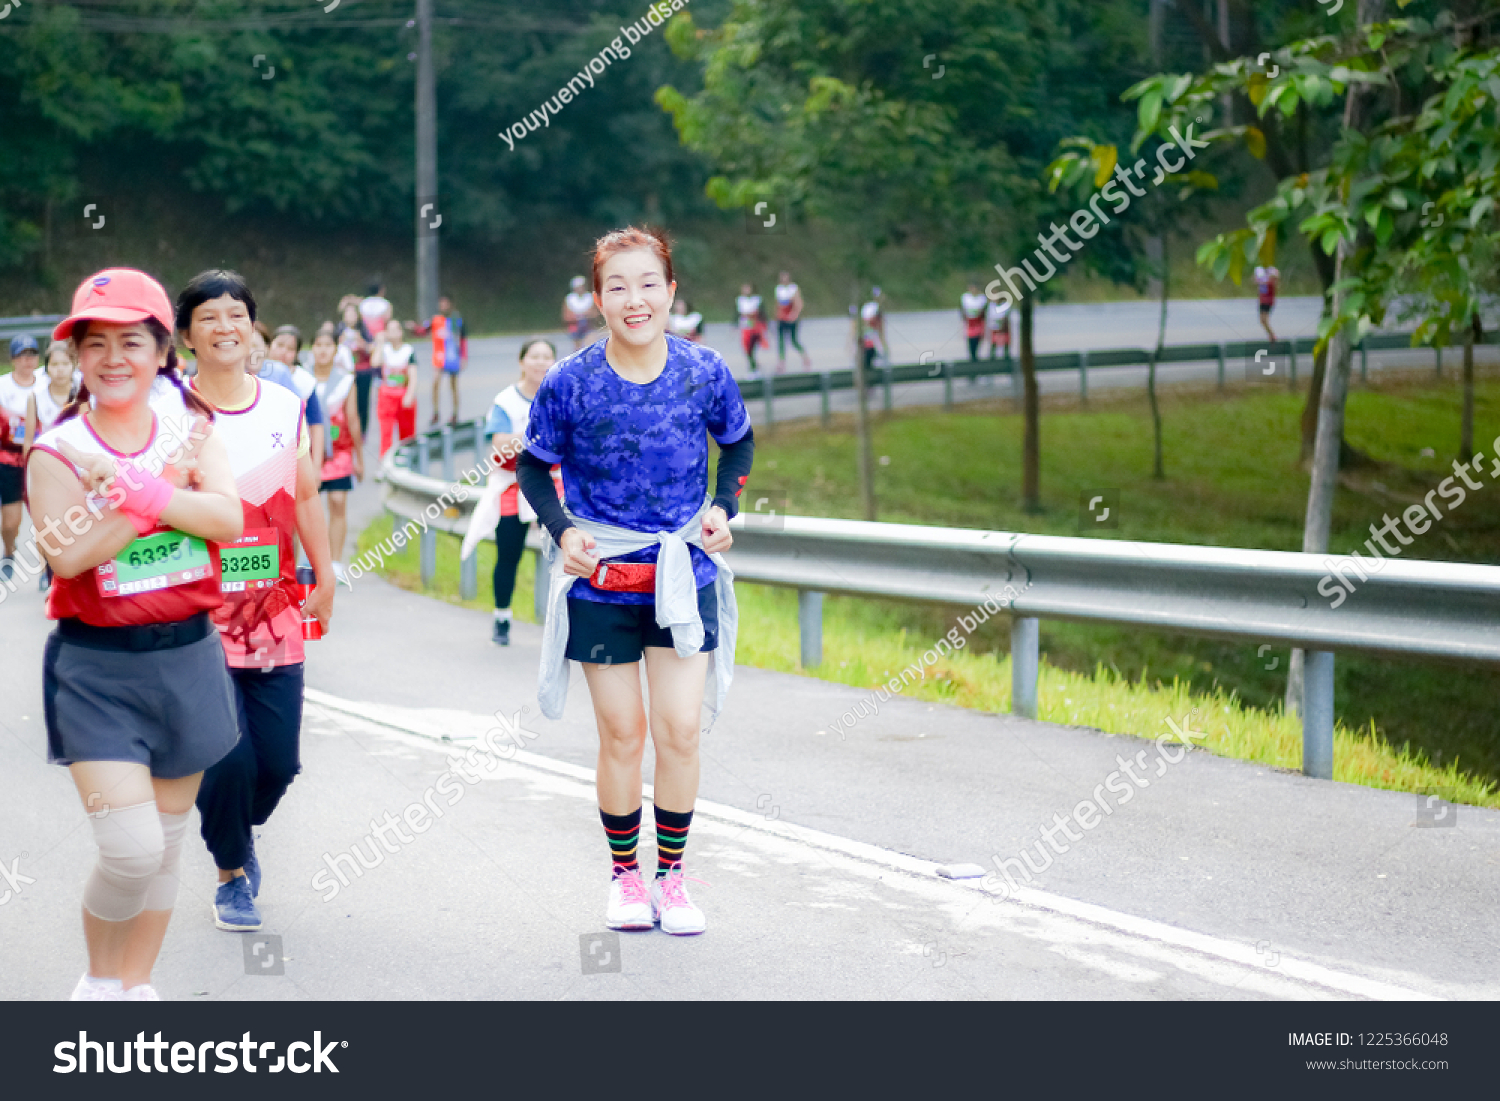 Chiang Rai THAILAND-９:29:2018: MFU RUN 2018 in Mae Fah Luang University Chiang Rai Thailand.People. Running at city streets. #1225366048